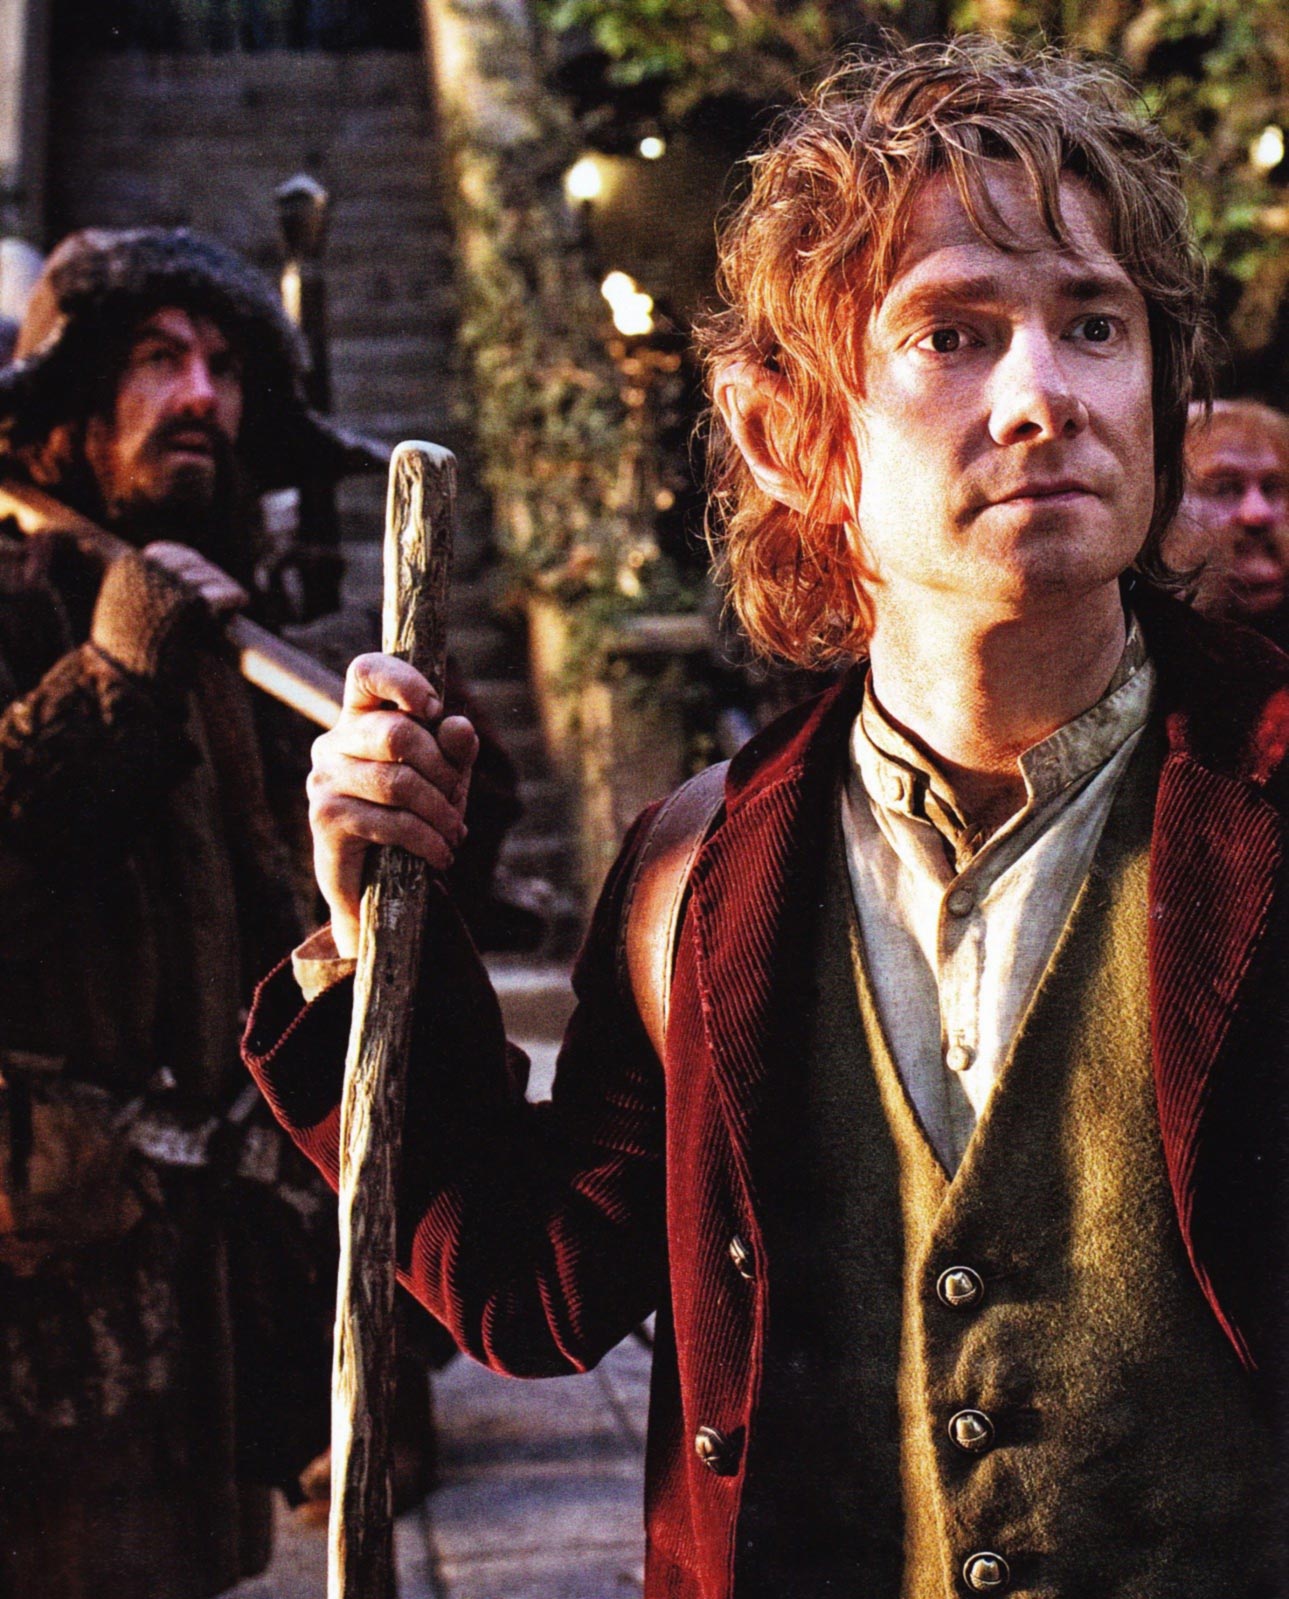 THE HOBBIT: AN UNEXPECTED JOURNEY Photos: Bilbo Baggins.